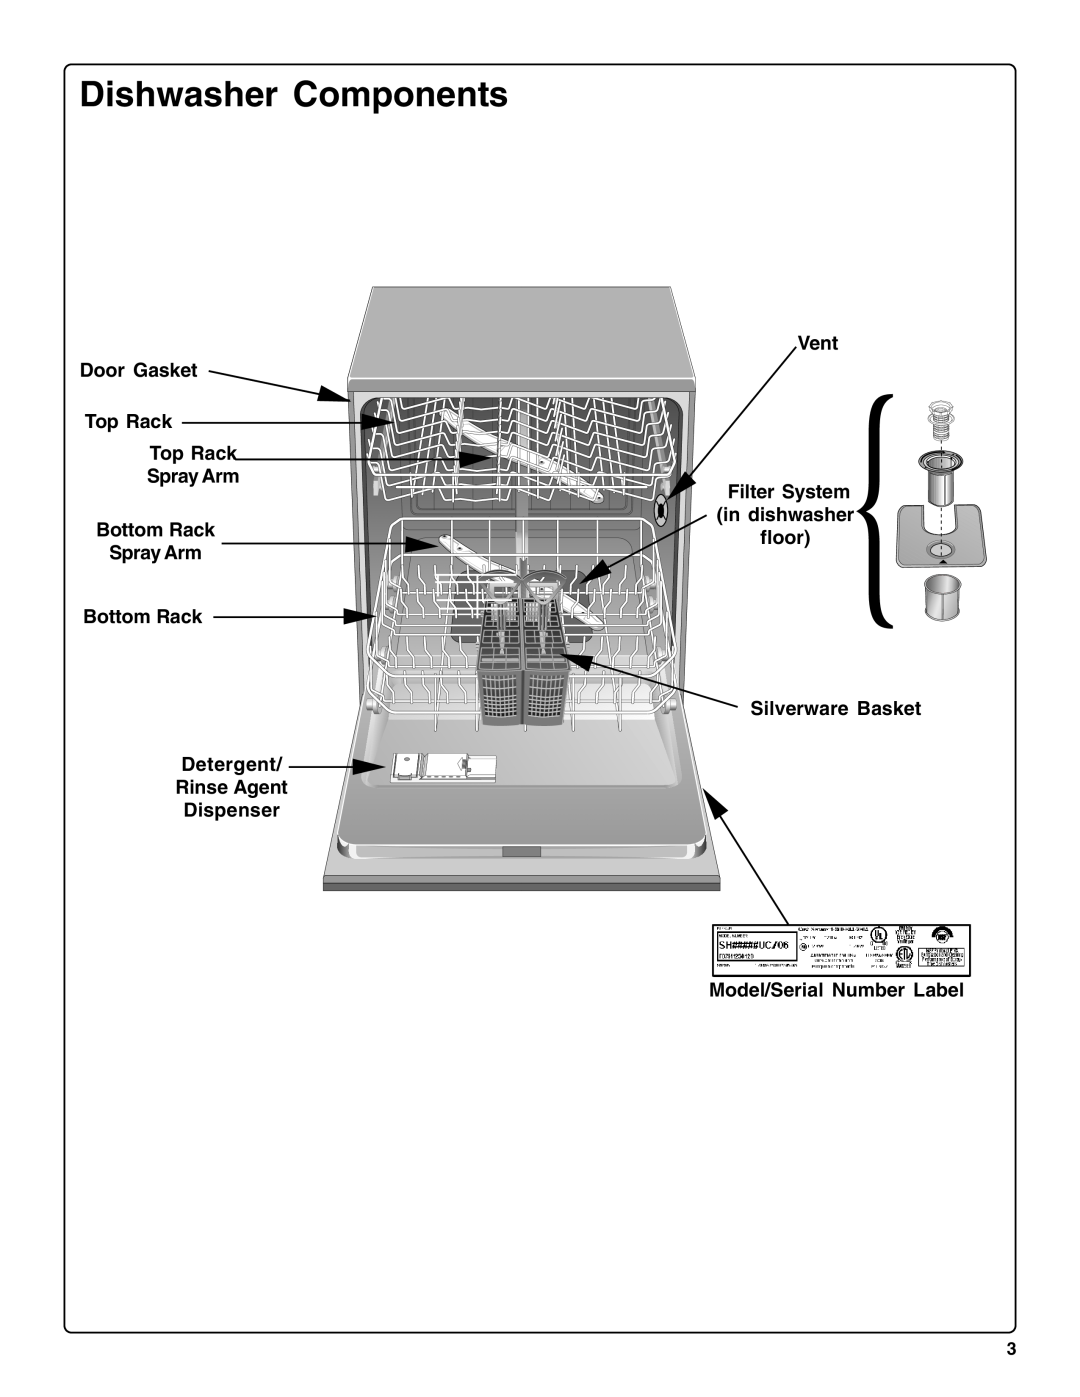 Bosch Appliances SHE66C Dishwasher Components, Door Gasket Top Rack Top Rack Spray Arm, Rinse Agent Dispenser 